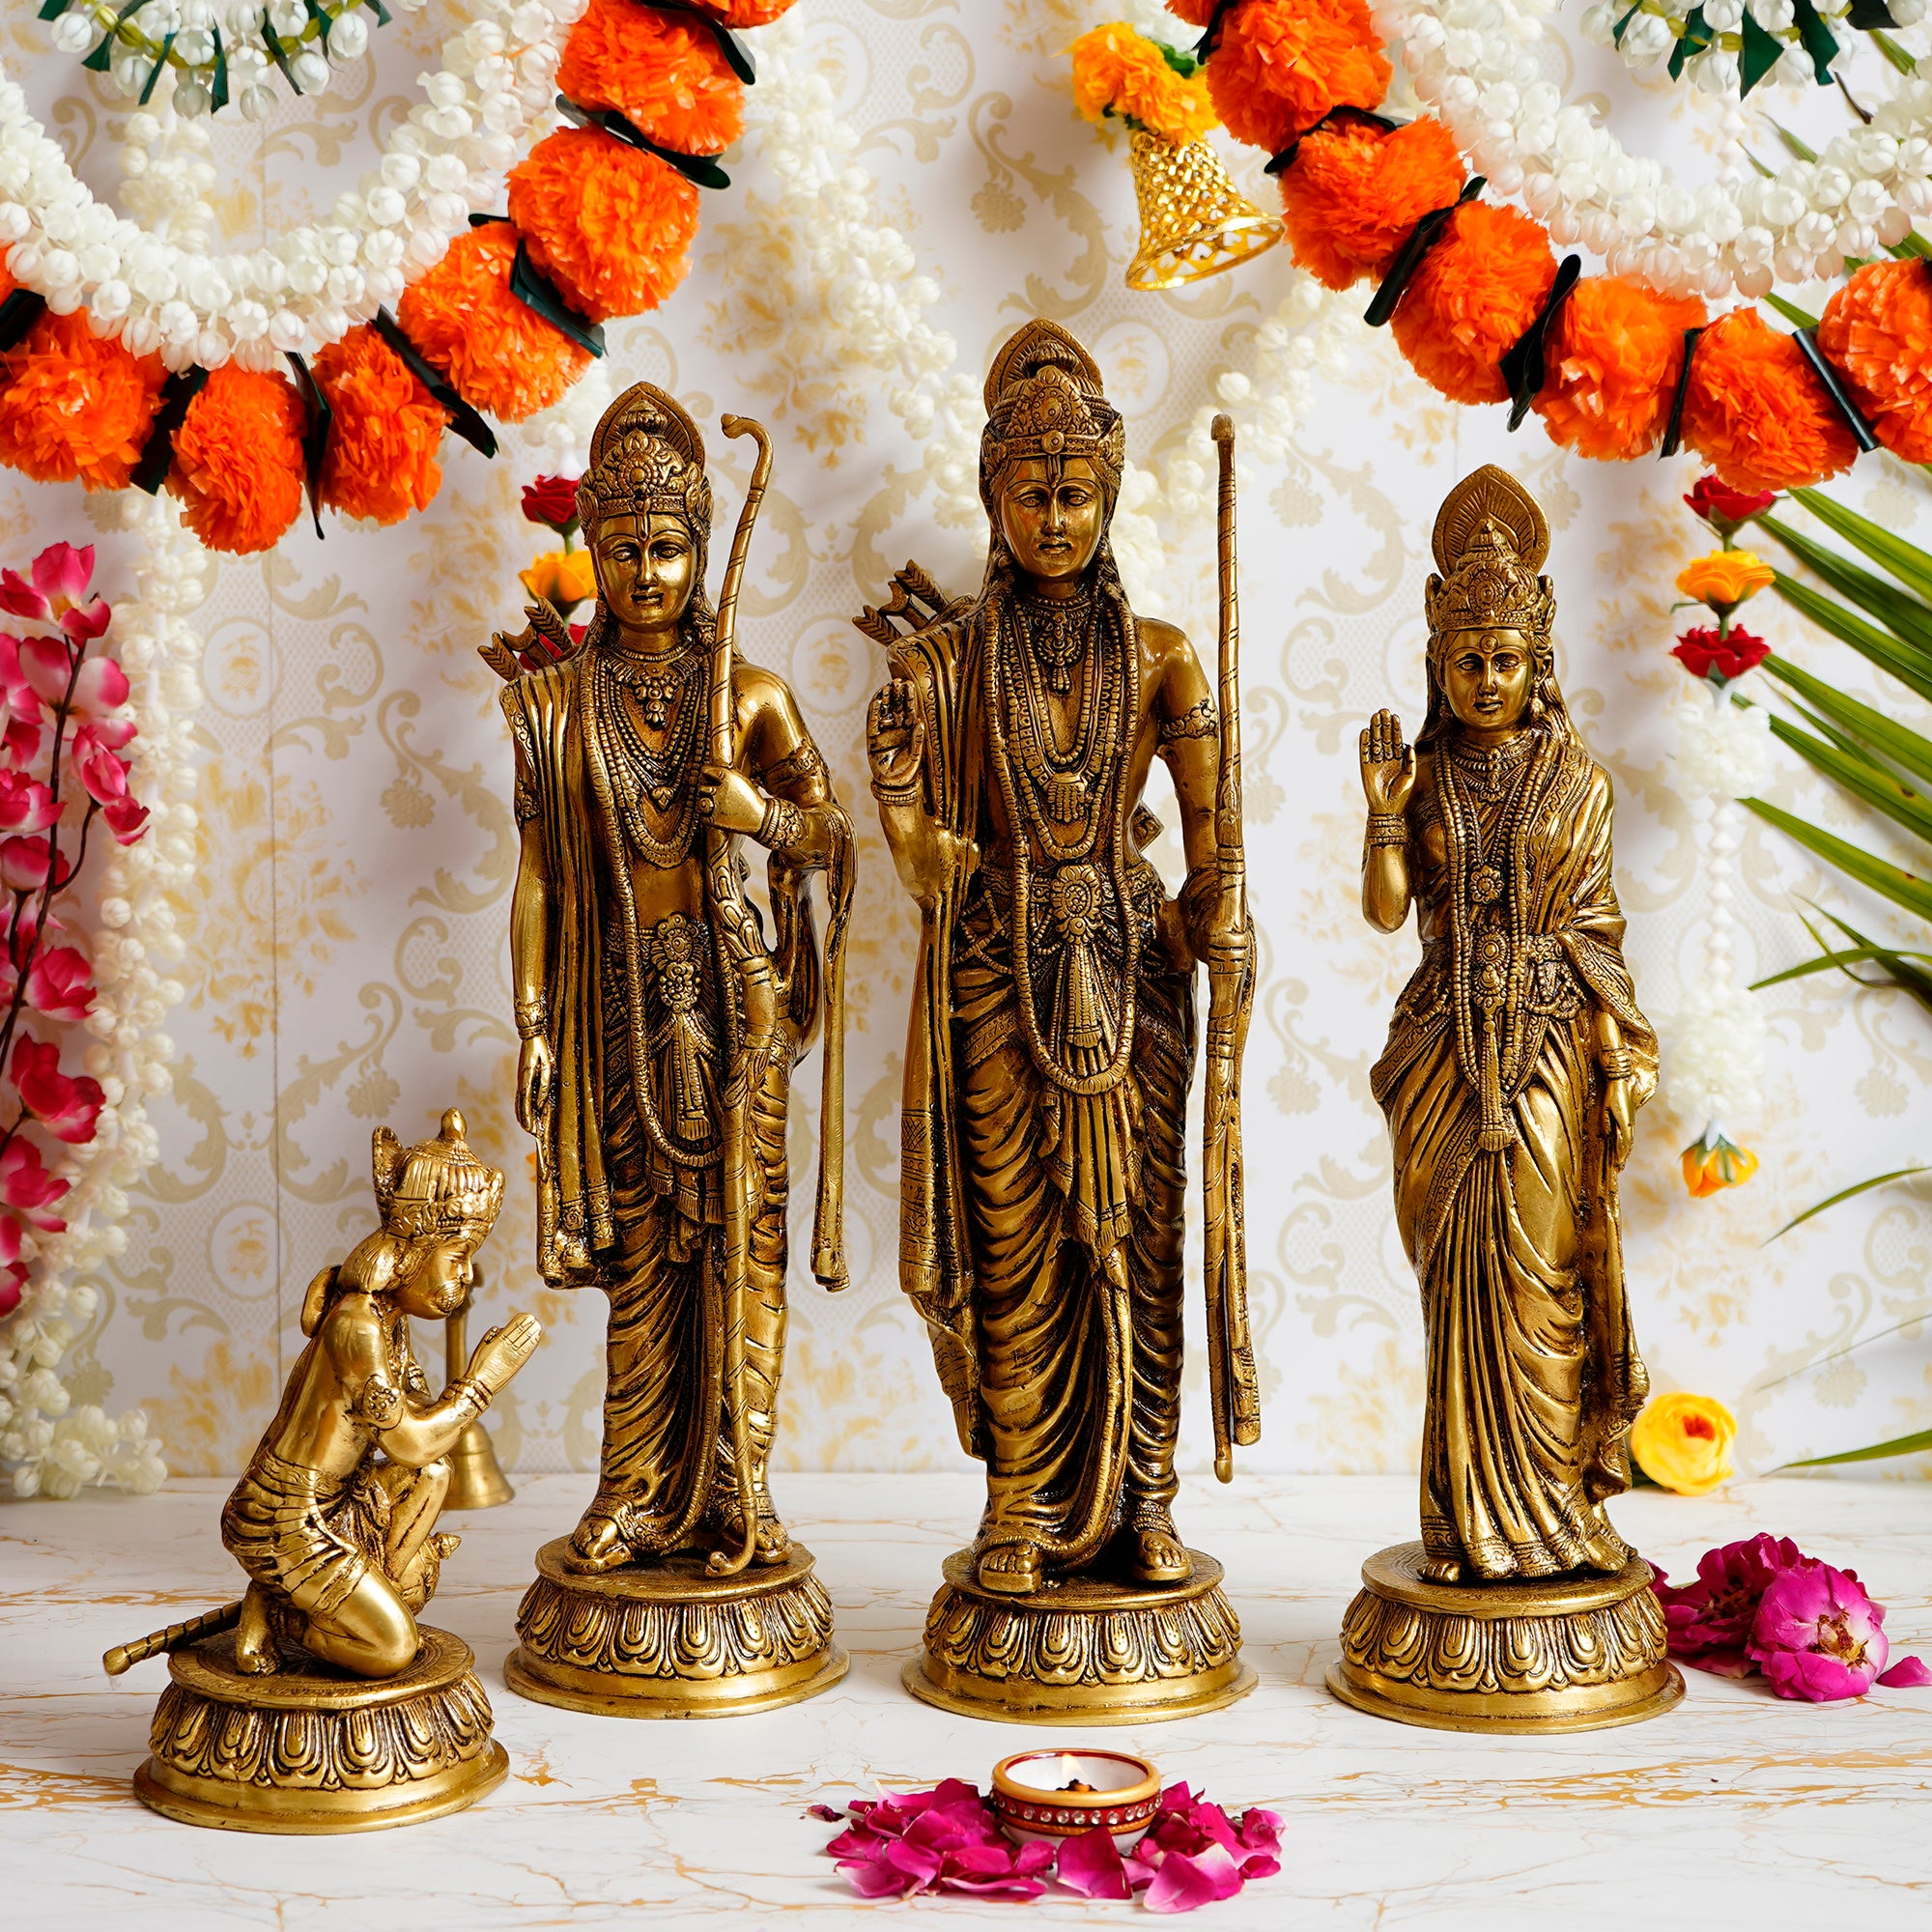 Golden Brass Handcrafted Ram Darbar - Lord Ram, Sita and Laxman Along With Lord Hanuman Idols